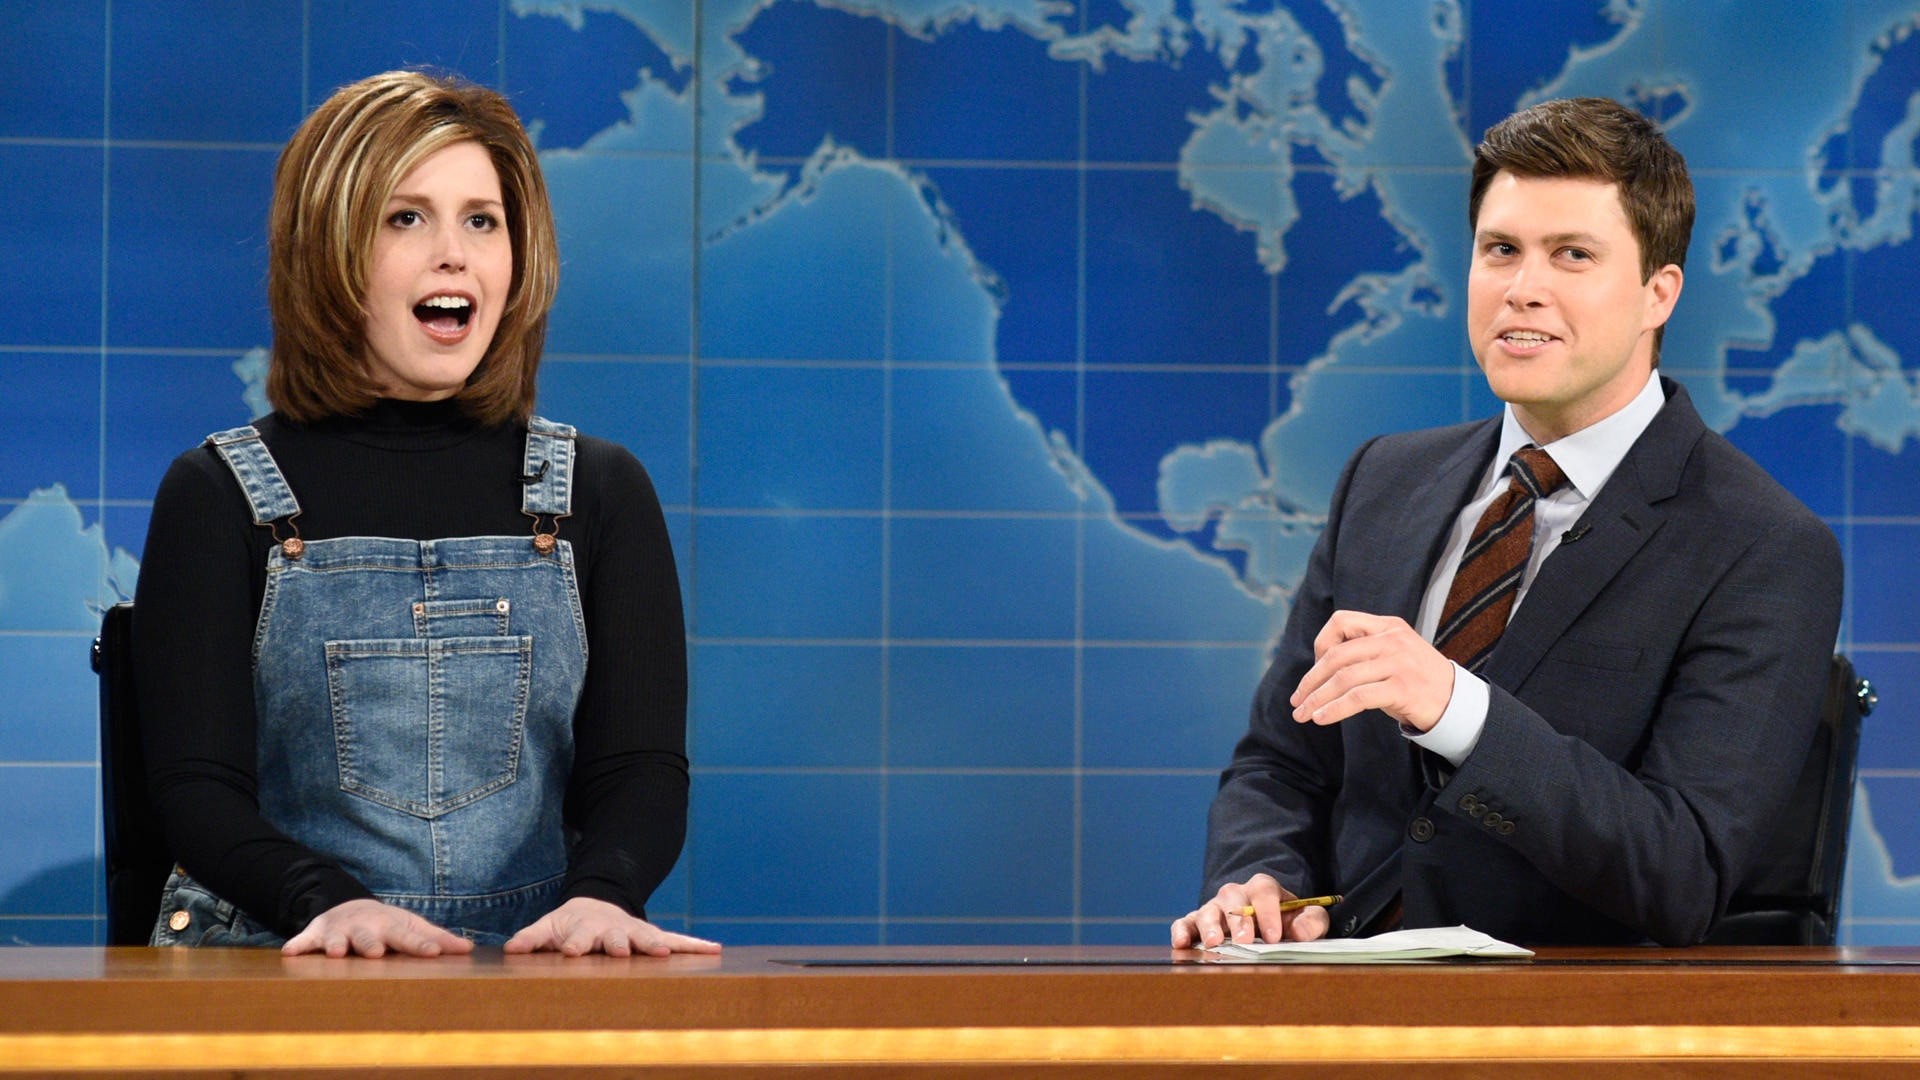 Watch Saturday Night Live Highlight: Weekend Update: Rachel from Friends - NBC.com